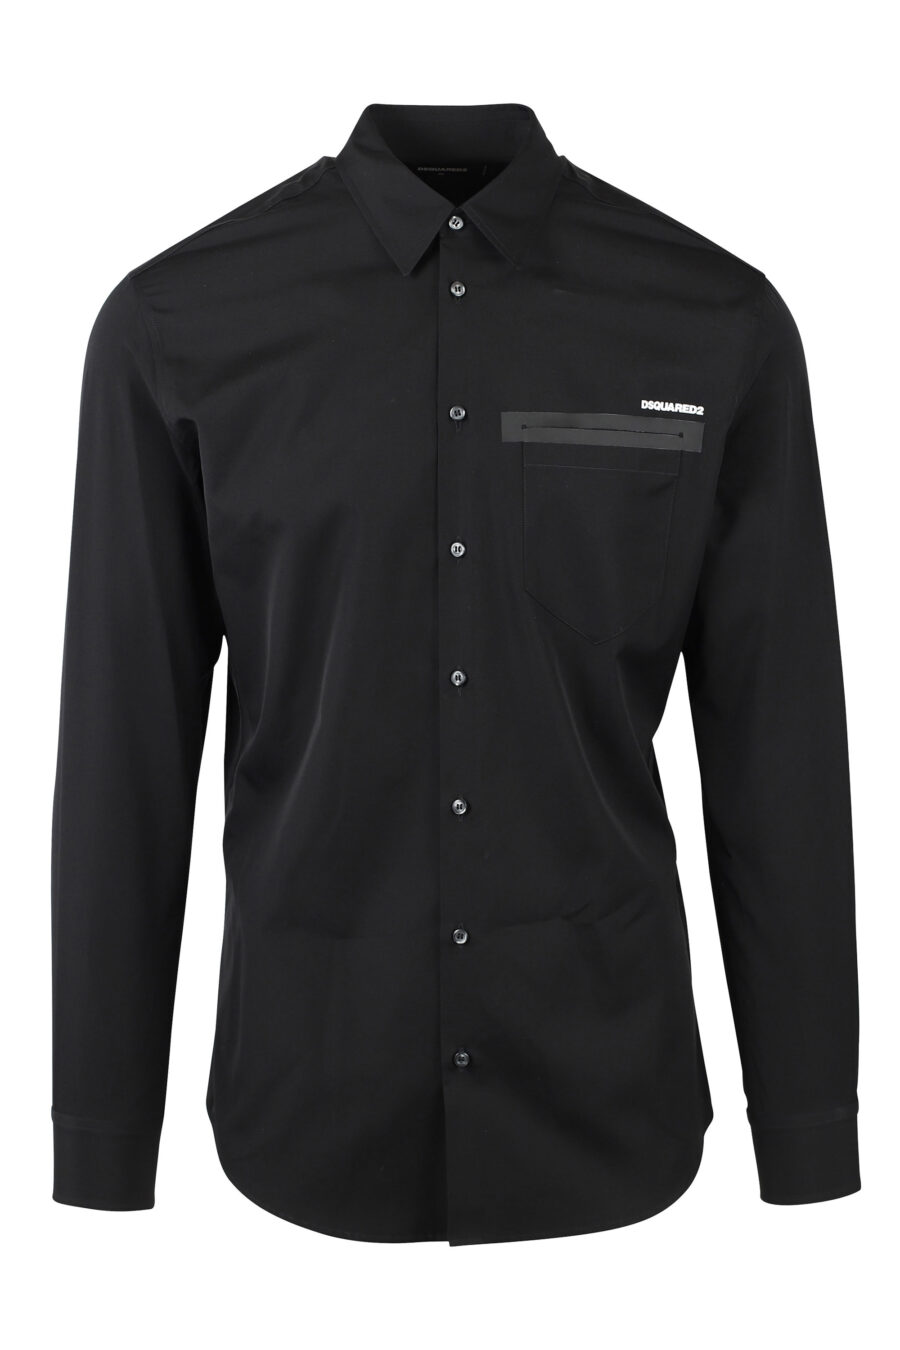 Camisa negra con minilogo cremallera - IMG 0772